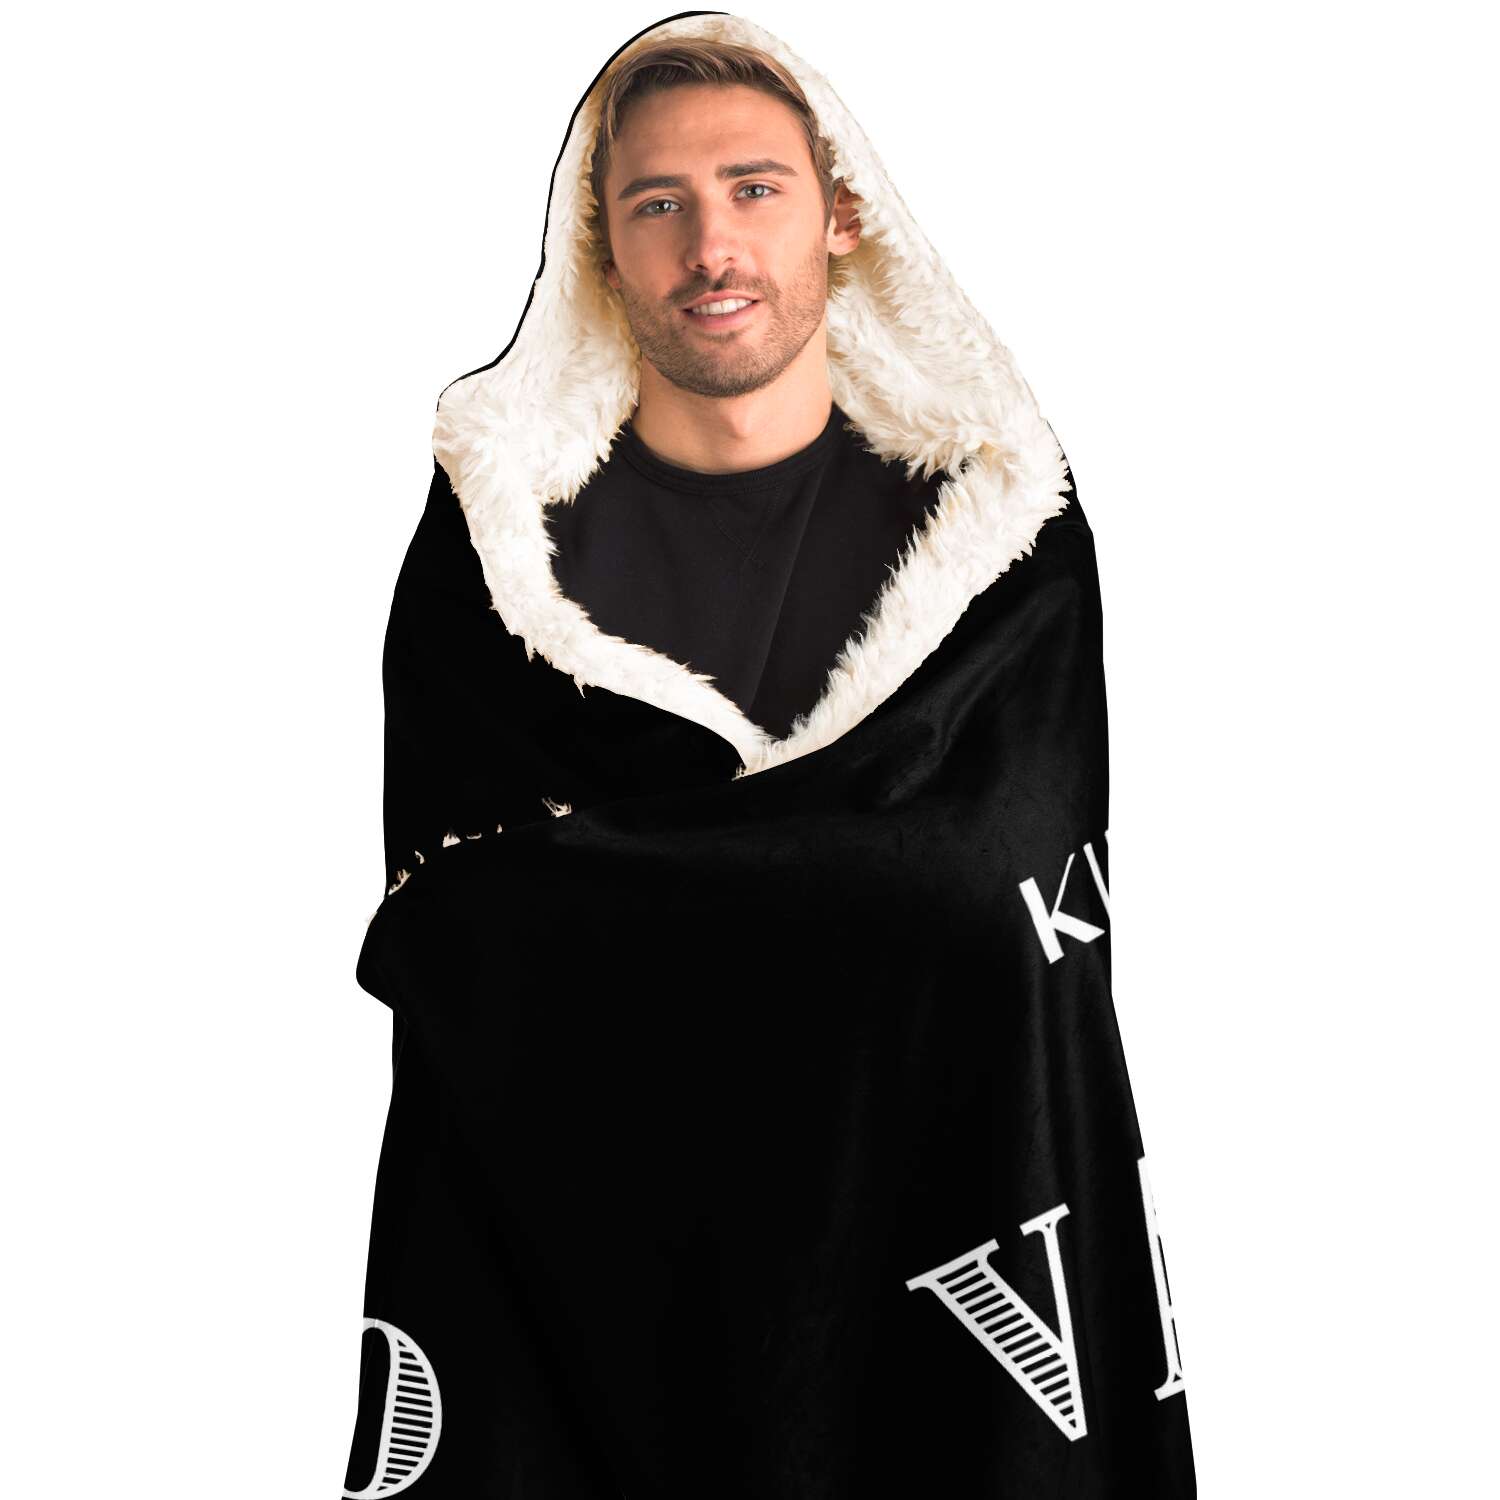 Vaffanculo Is My Wingman Hooded Blanket